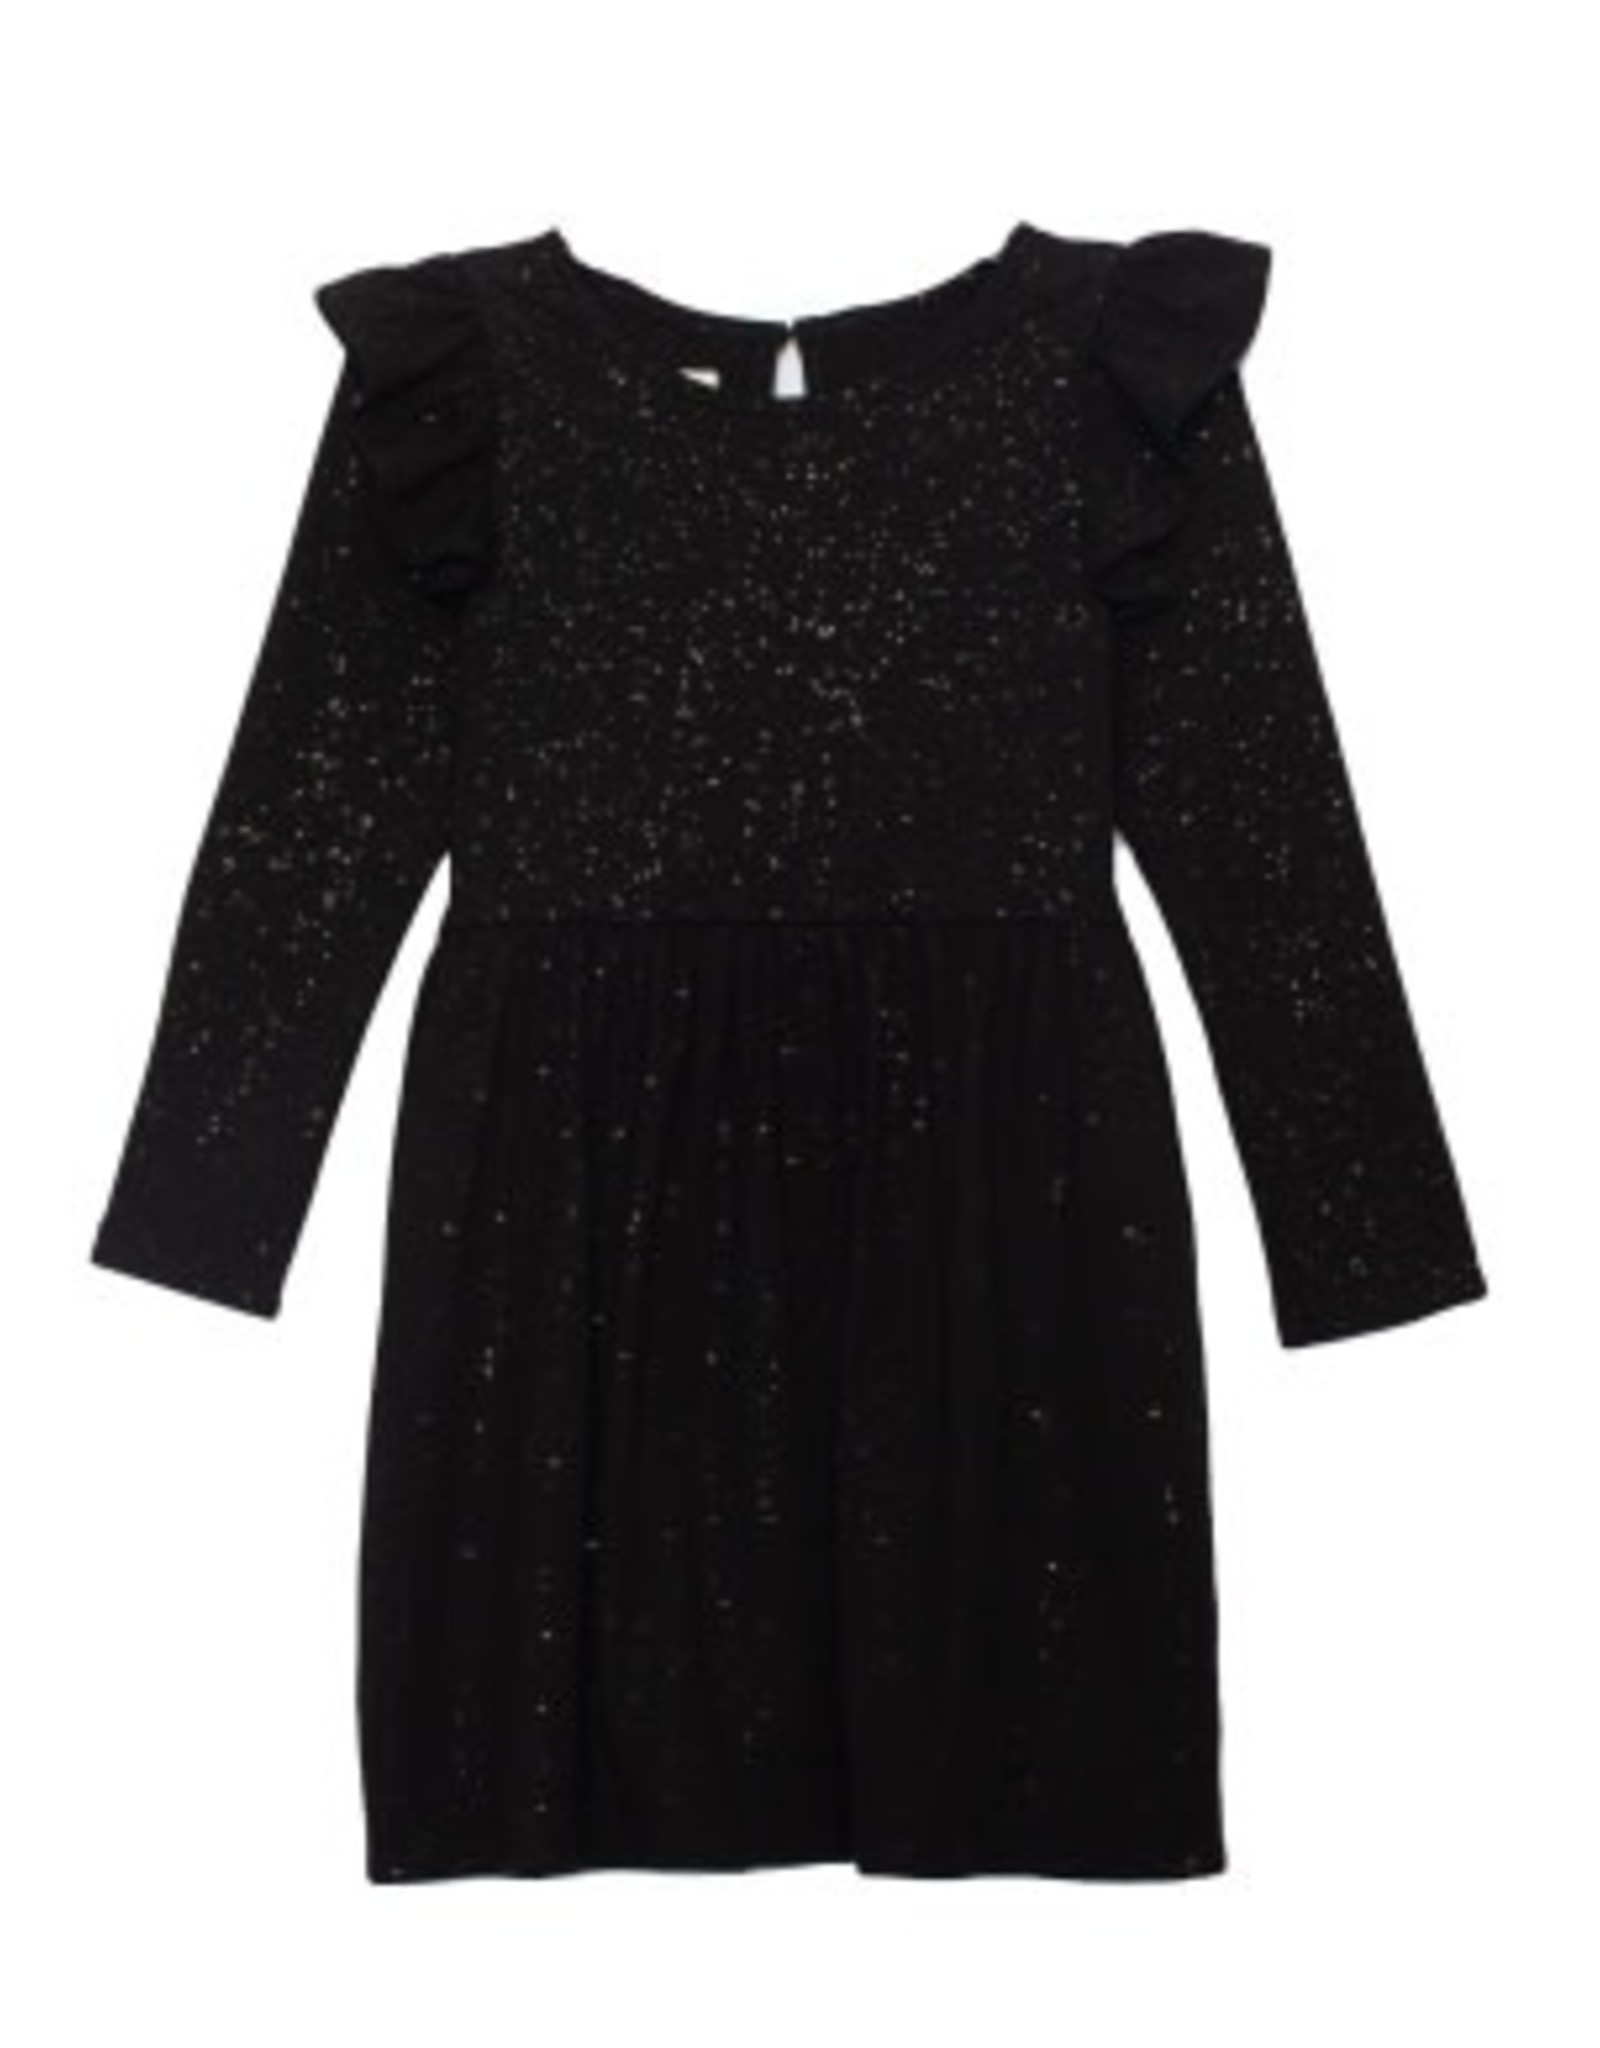 Isobella & Chloe Isobella & Chloe- Sparkly Knit Dress: Black